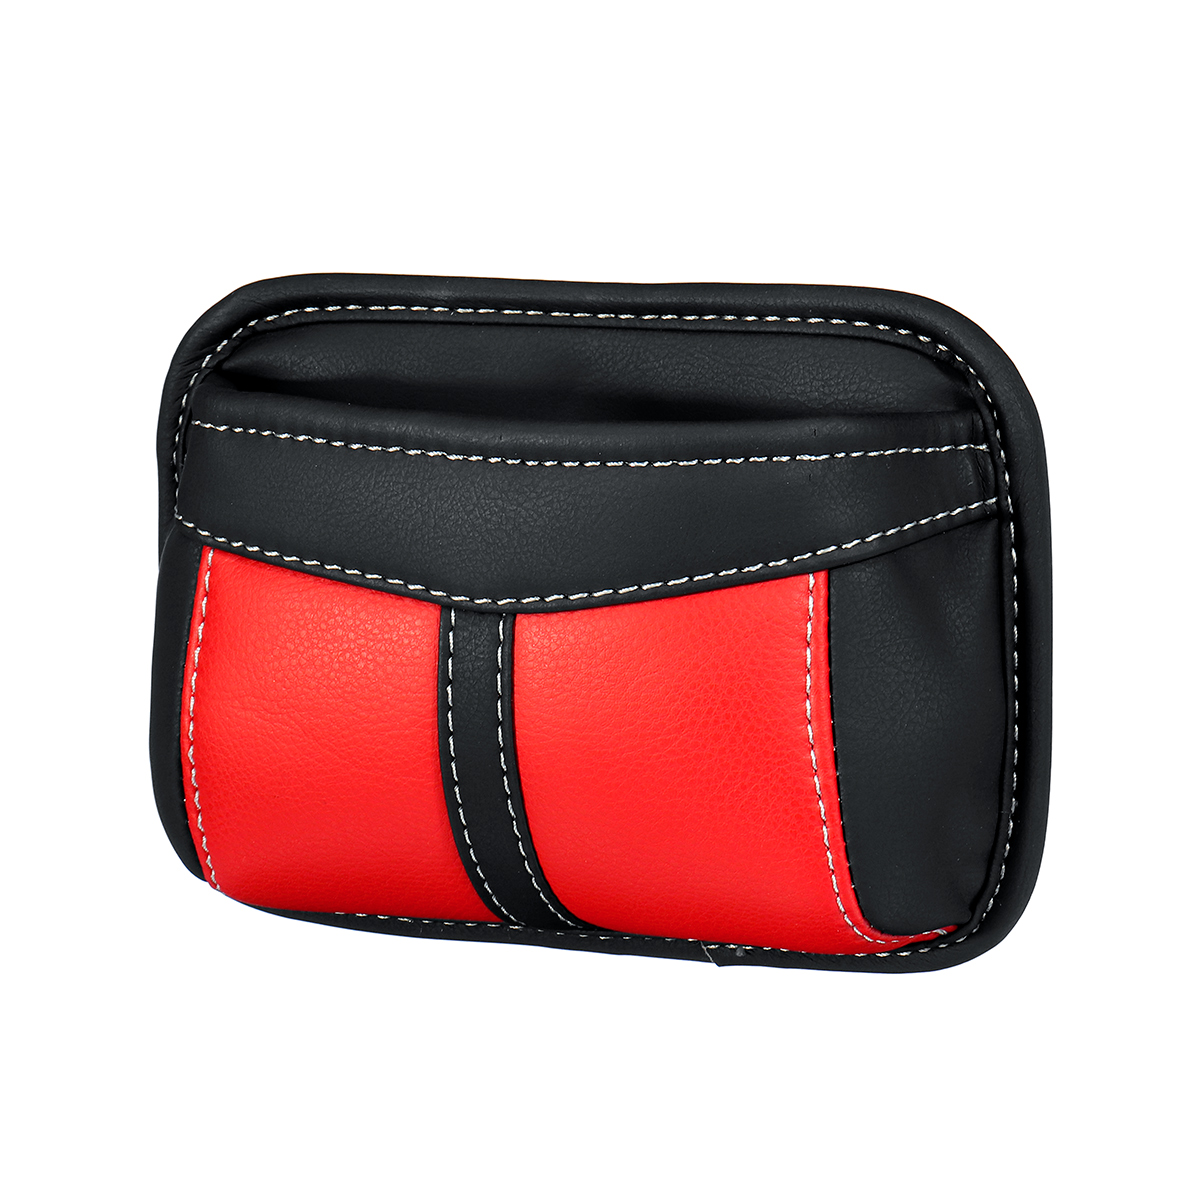 Car-Storage-Bag-Organizer-Phone-Wallet-Pocket-Pouch-Hanging-Holder-PU-leather-1632847-10